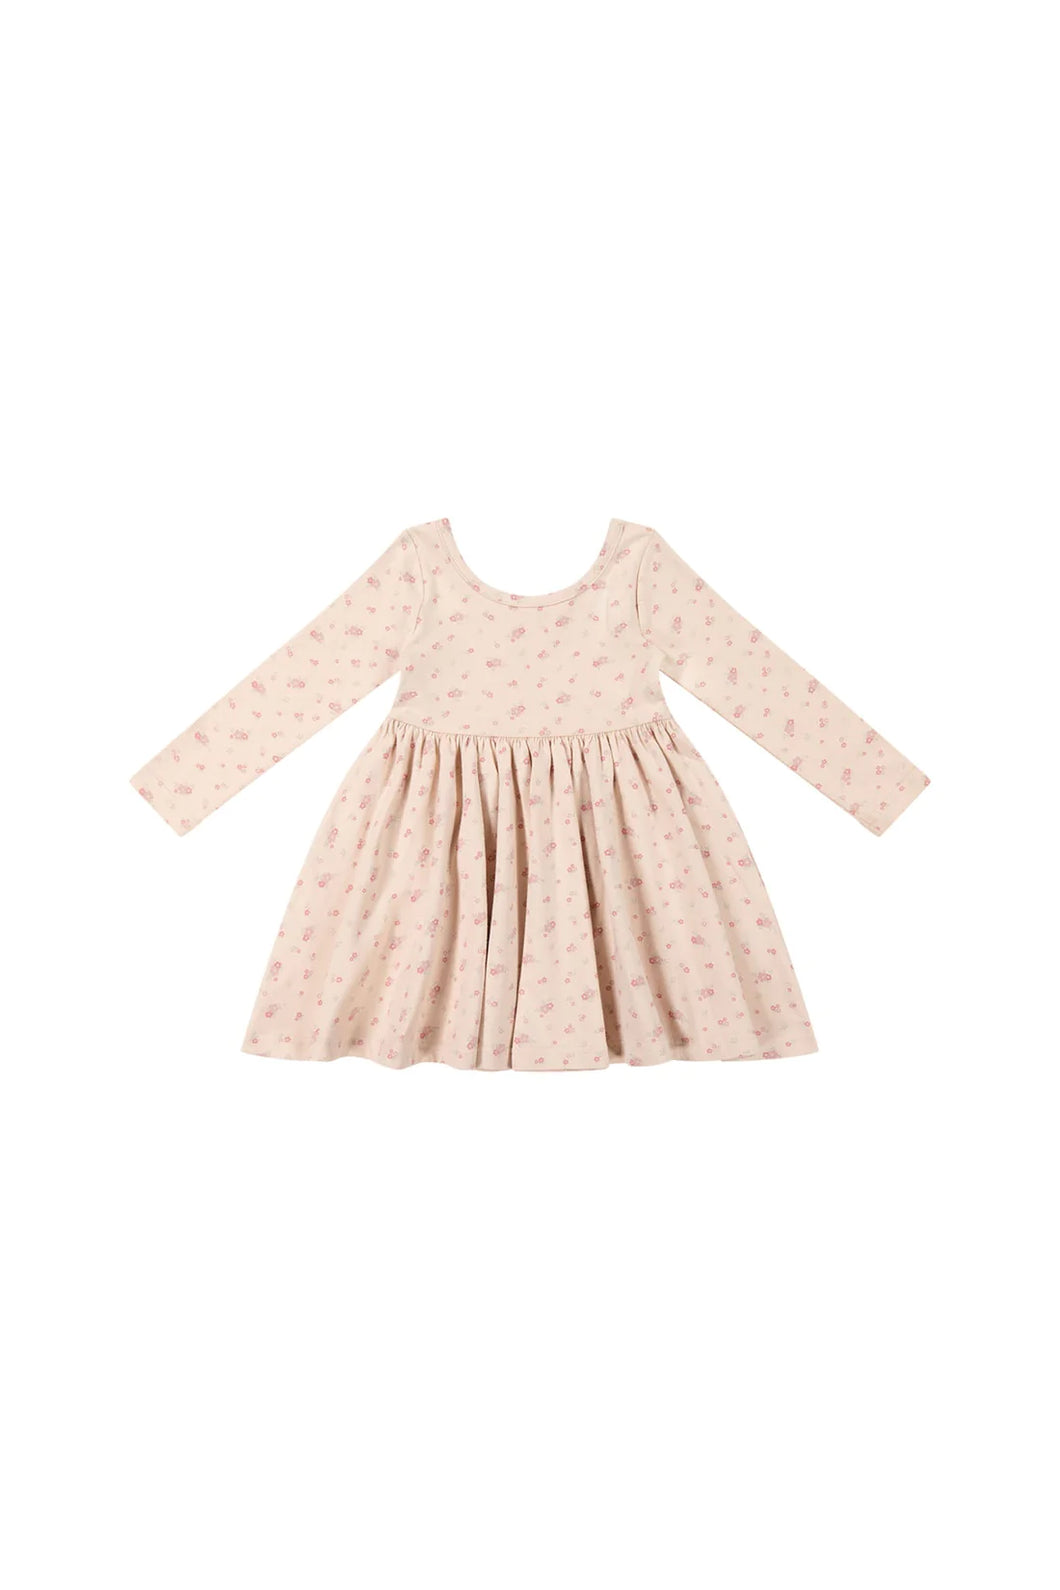 Organic Cotton Tallulah Dress - Cindy Whisper Pink